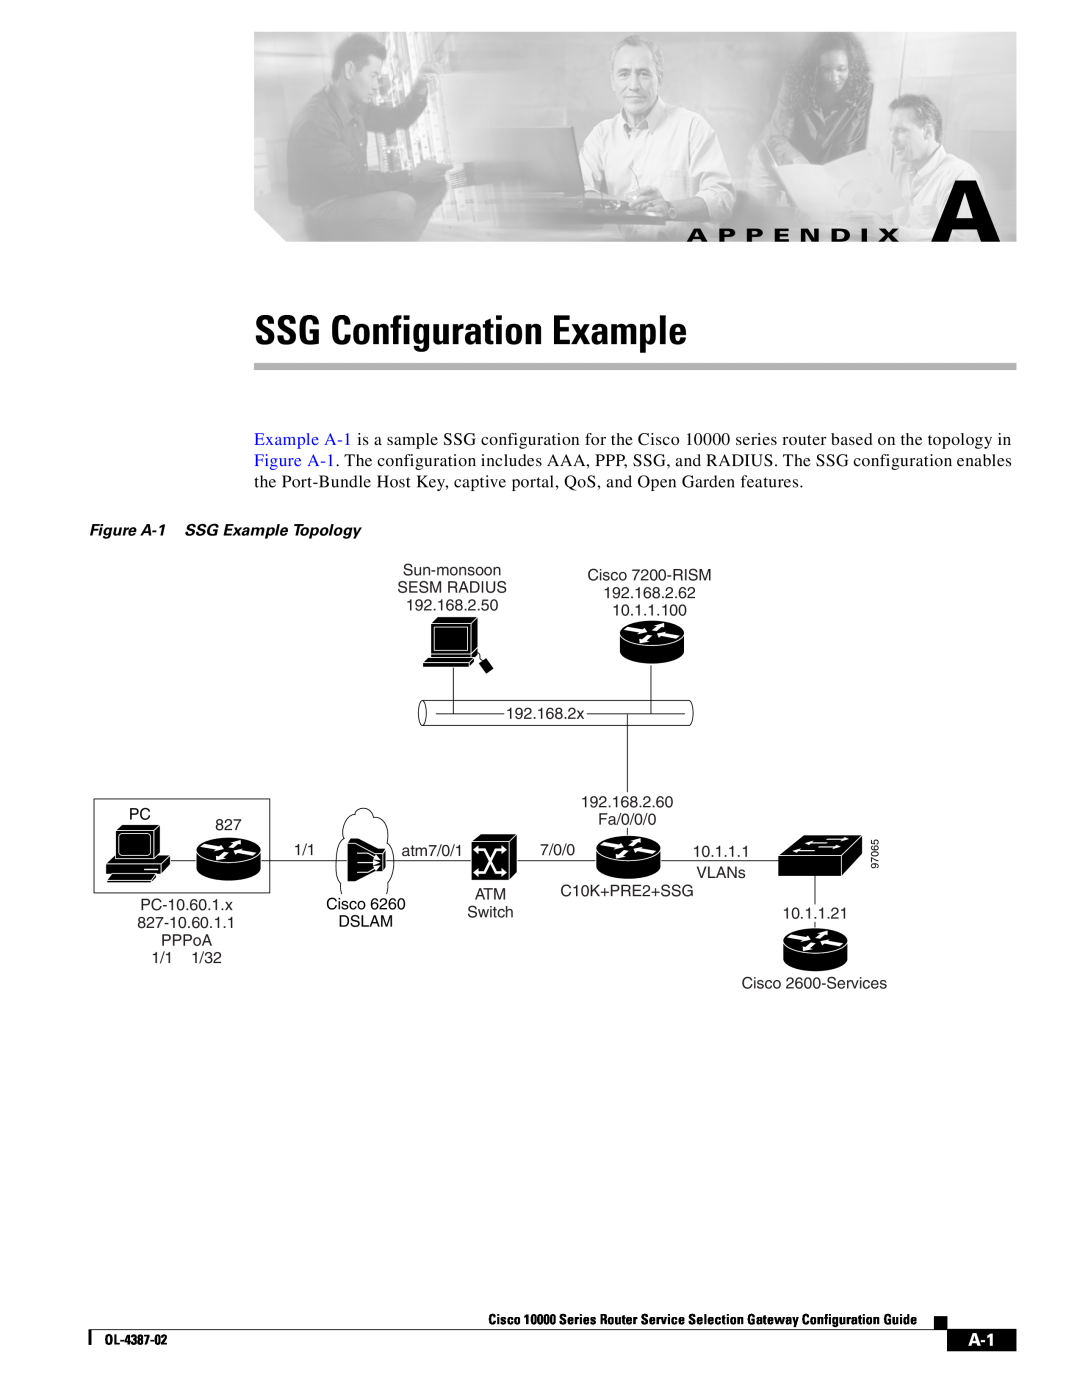 Cisco Systems OL-4387-02 manual SSG Configuration Example, A P P E N D I X A 